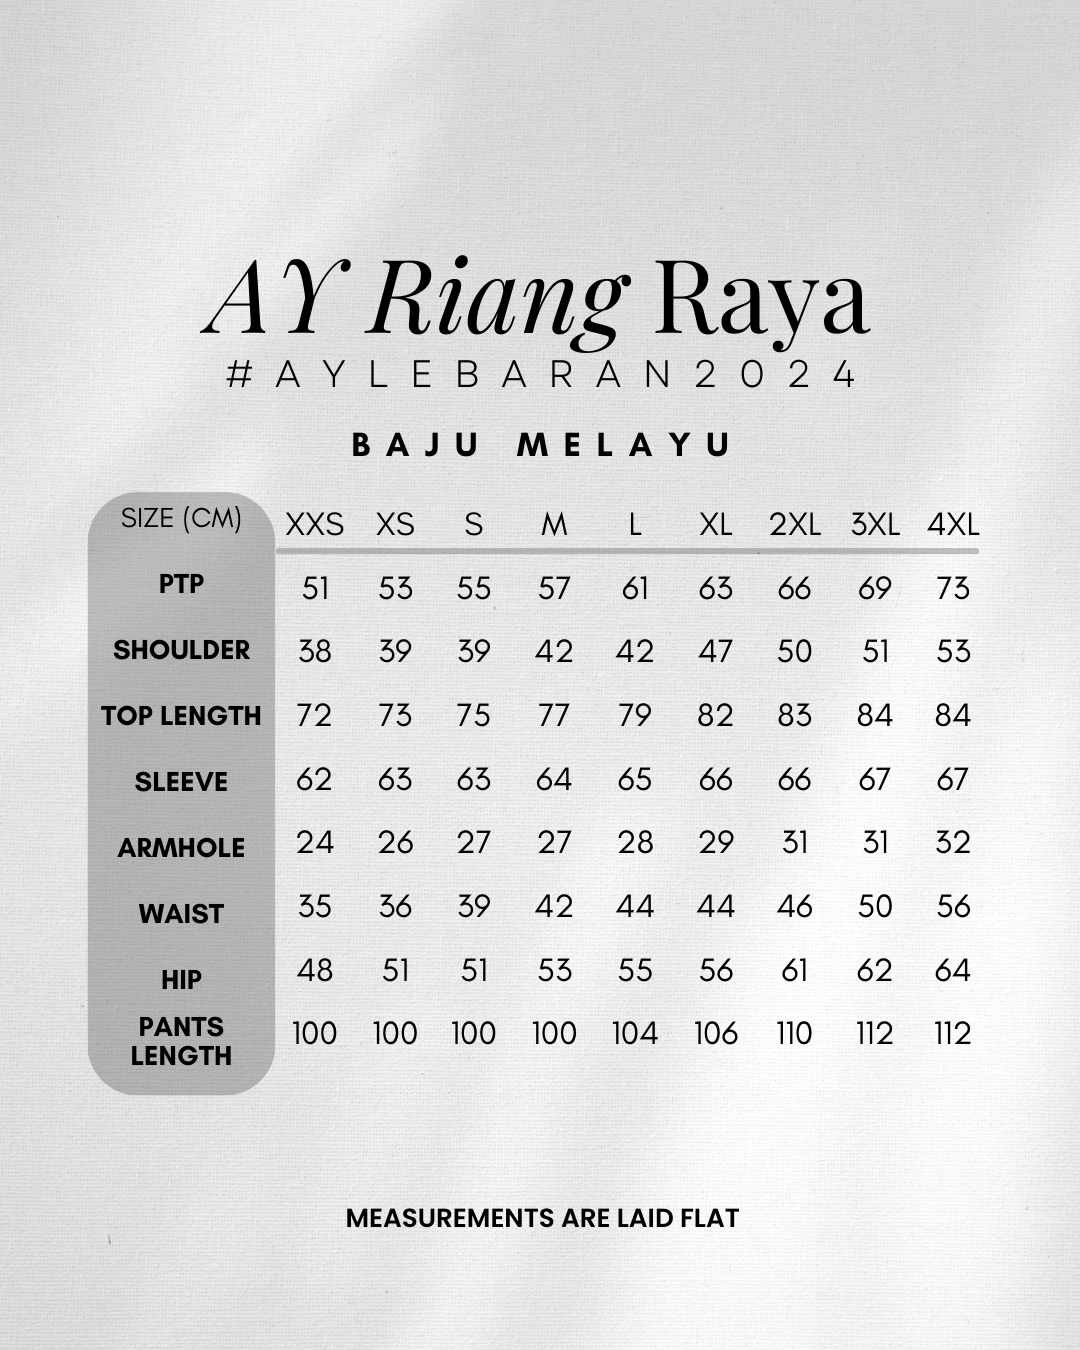 AYLEBARAN 2024 Nikmat Men's Baju Melayu